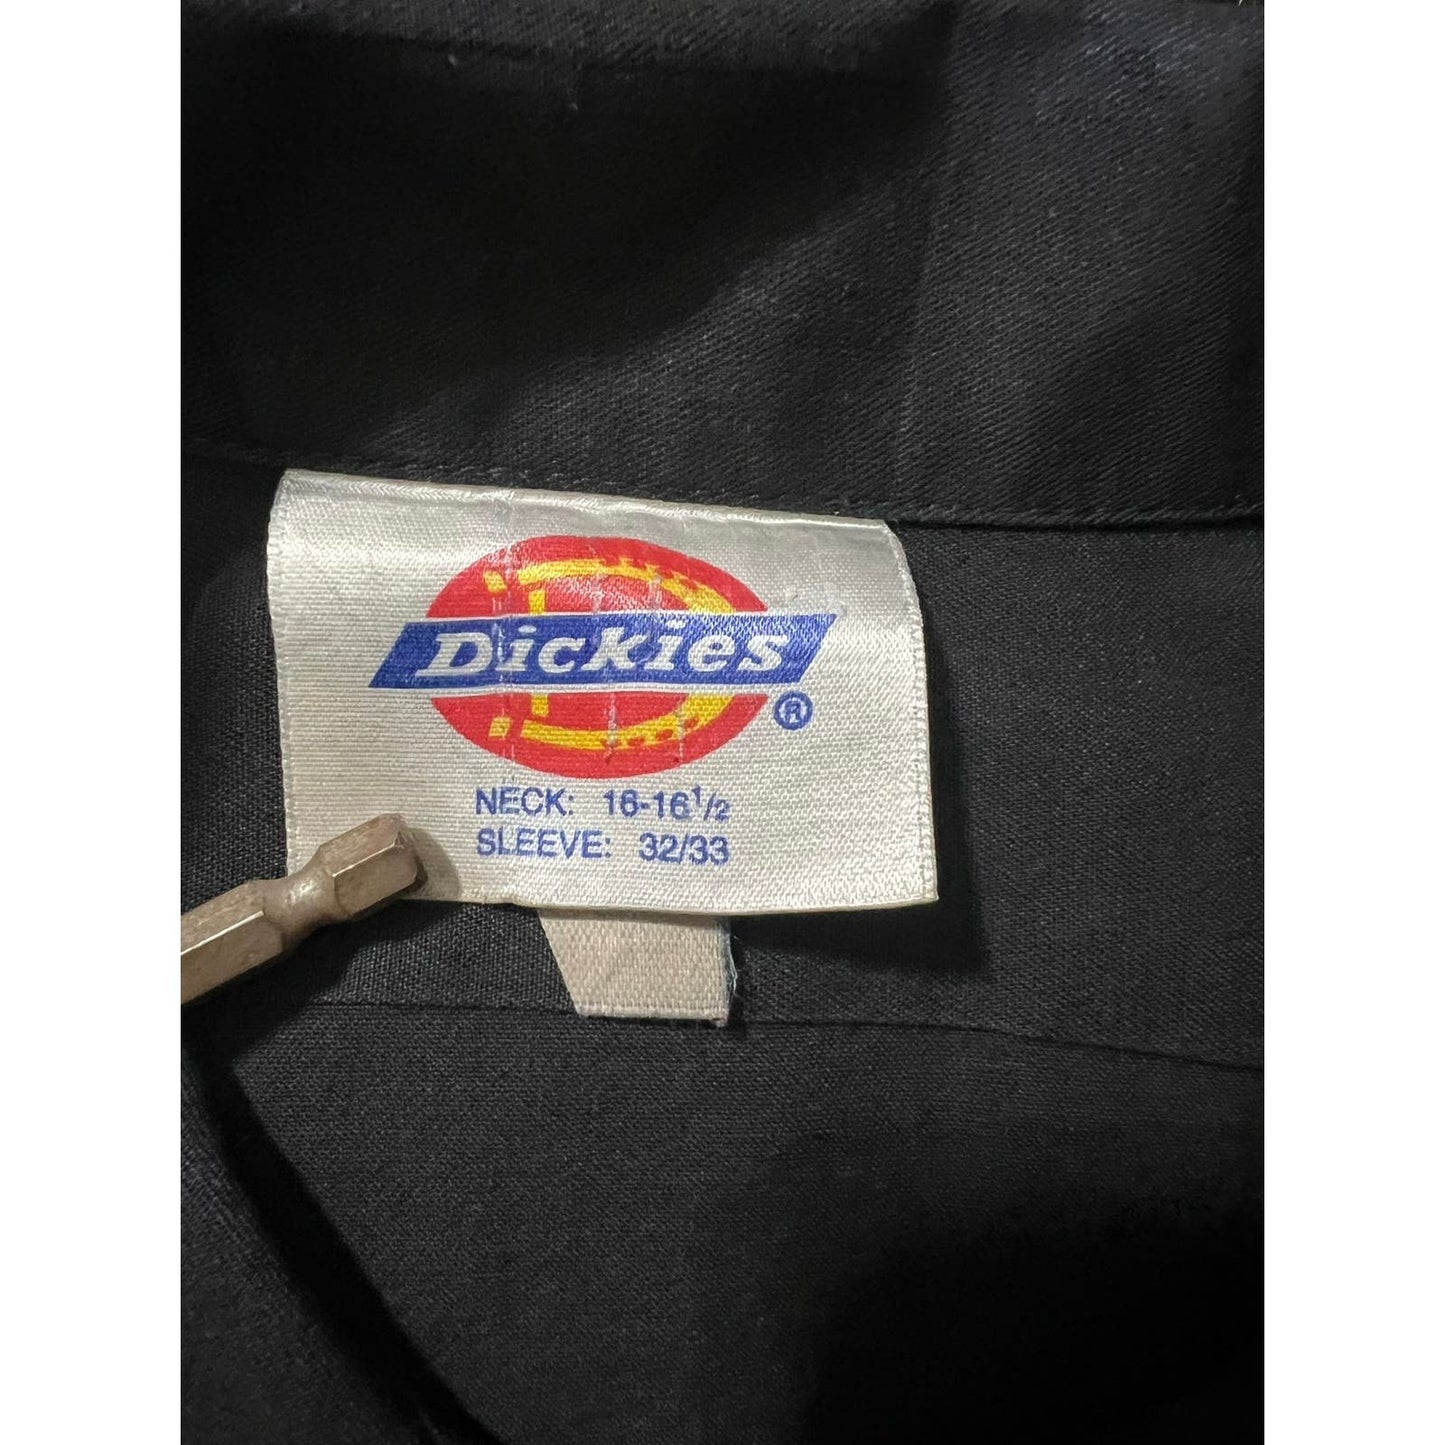 Dickies Black Work Shirt button